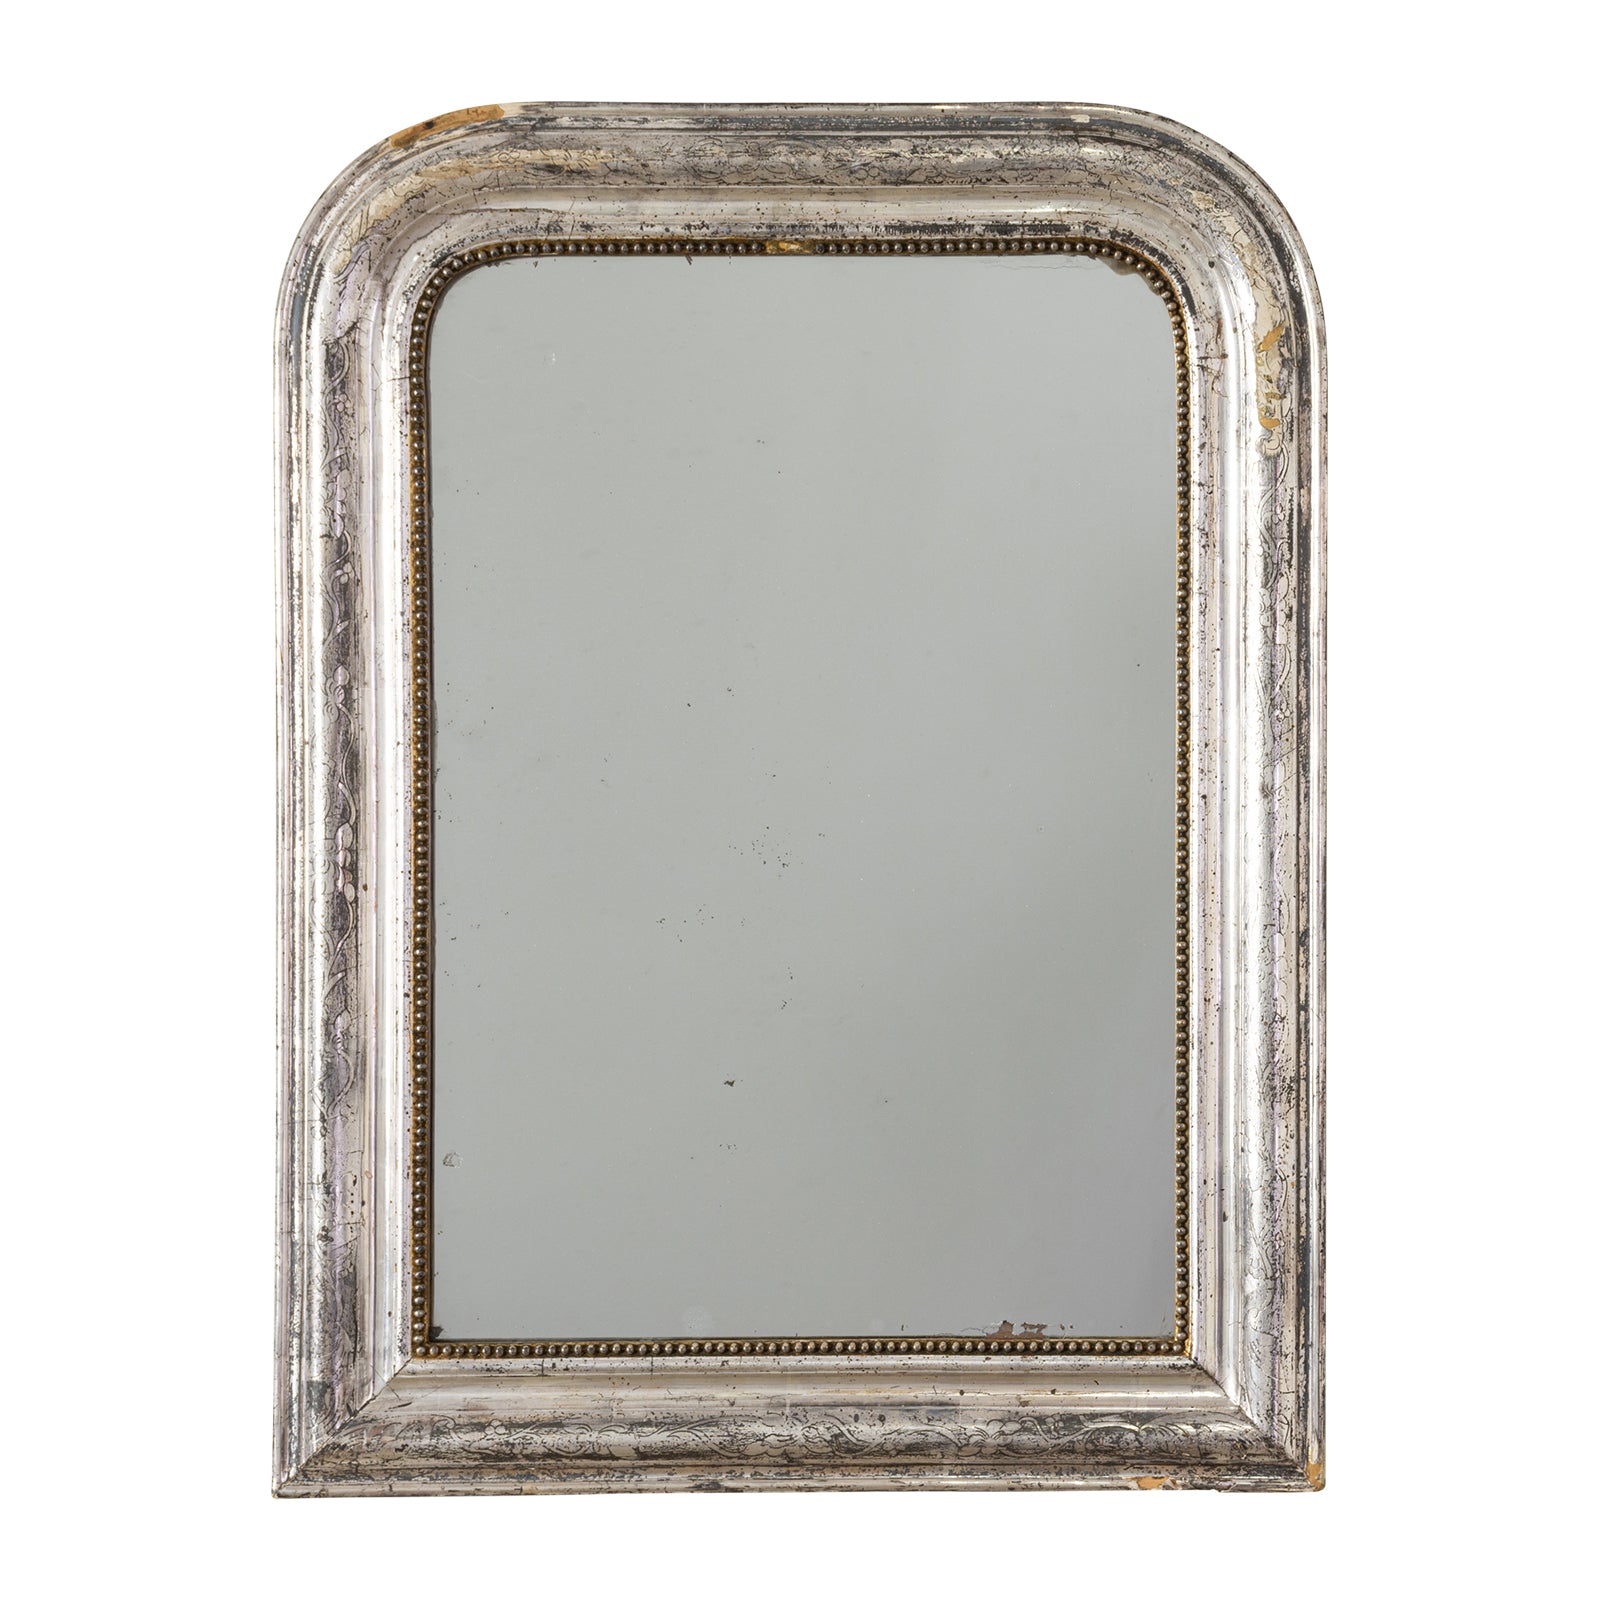 Antique Silver Gilt Overmantel mirror